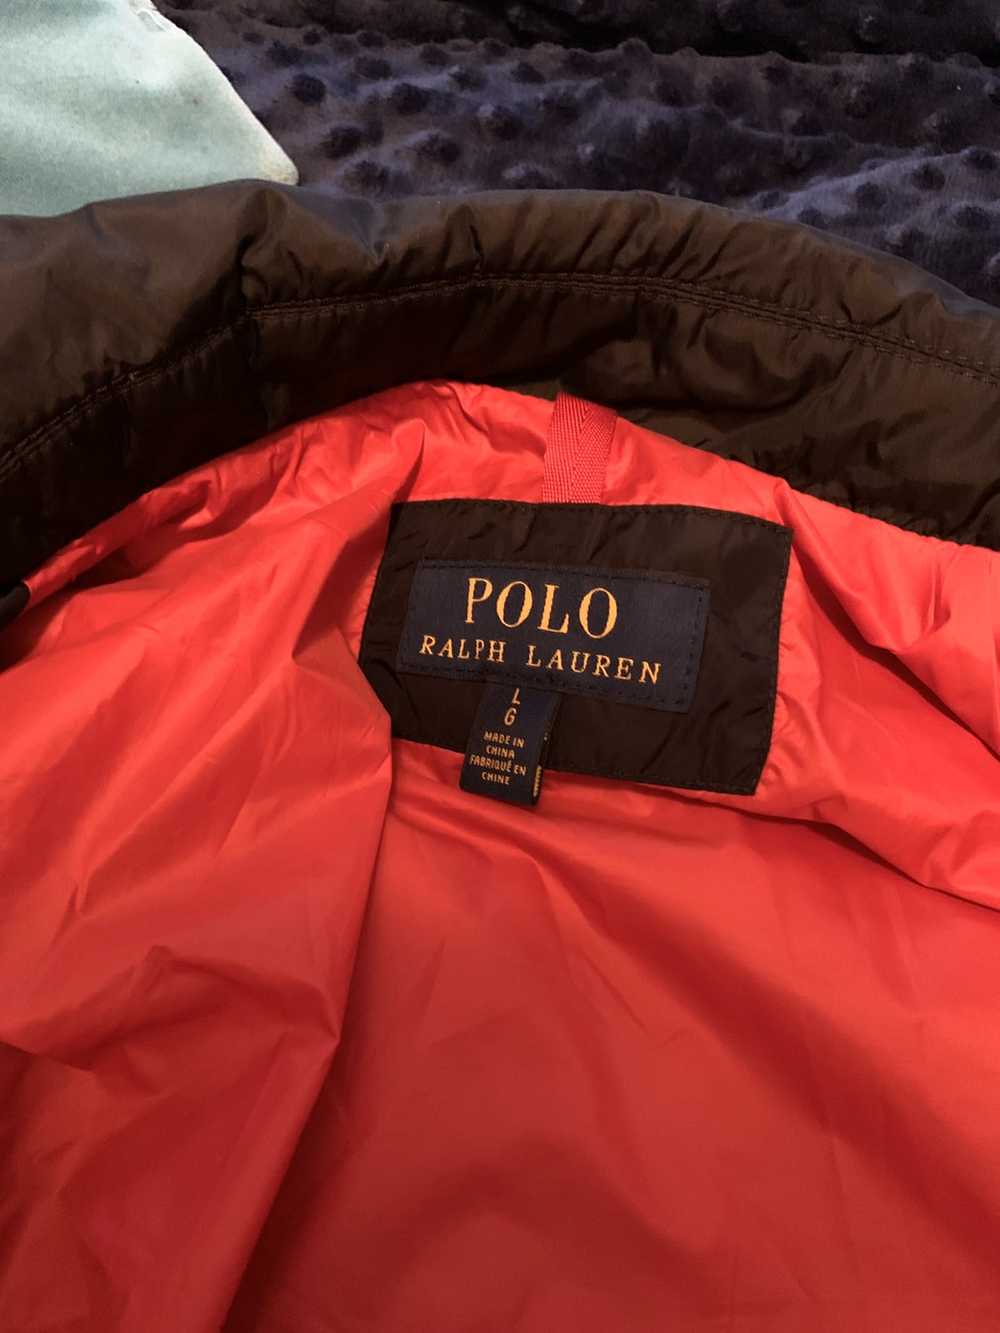 Polo Ralph Lauren Polo jacket - image 2